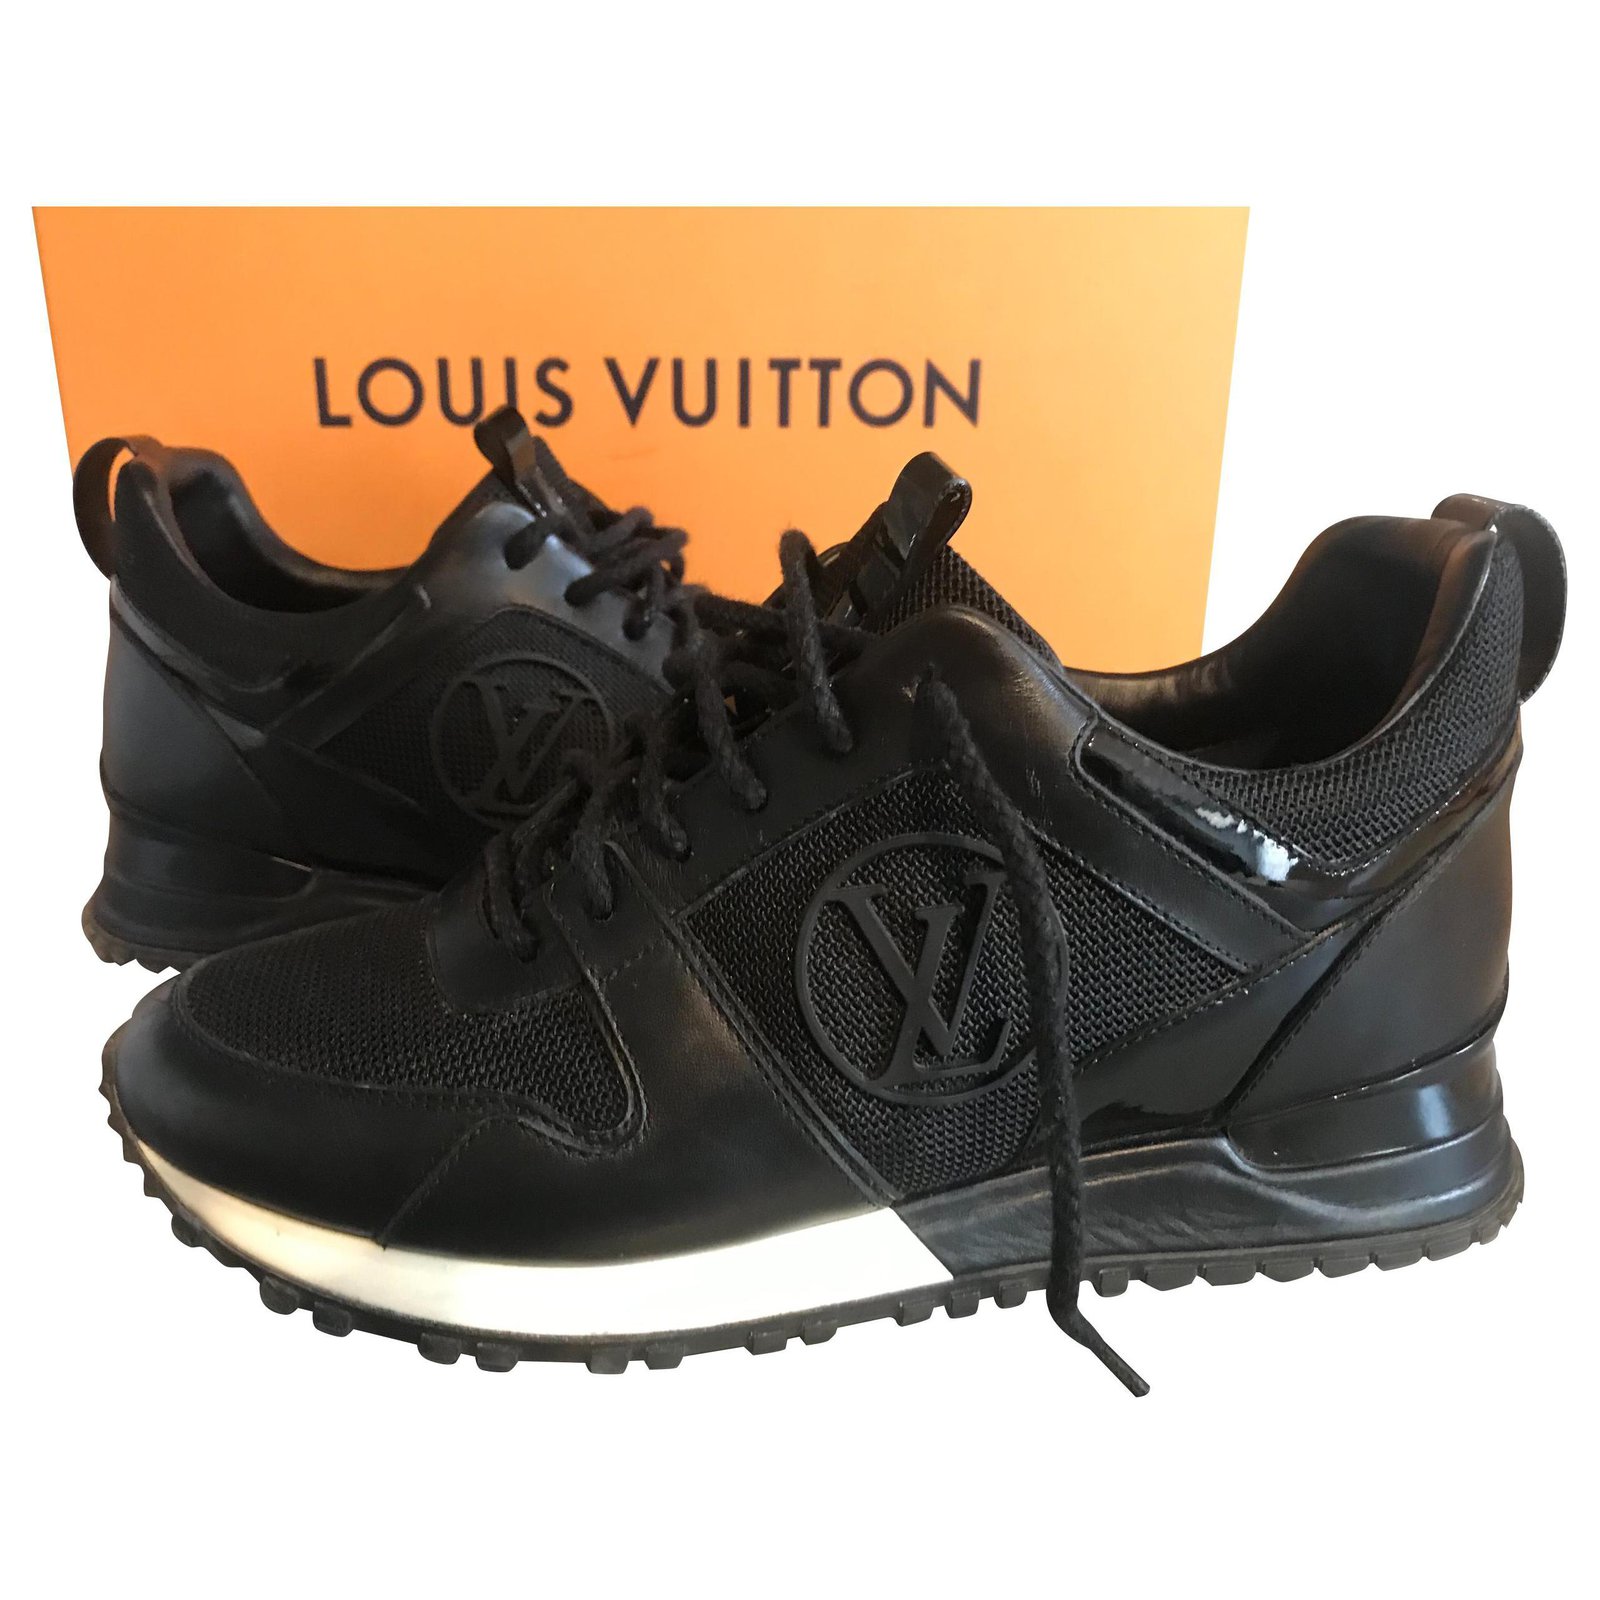 Louis Vuitton Vivienne Head Bag Charm Key Holder 570291